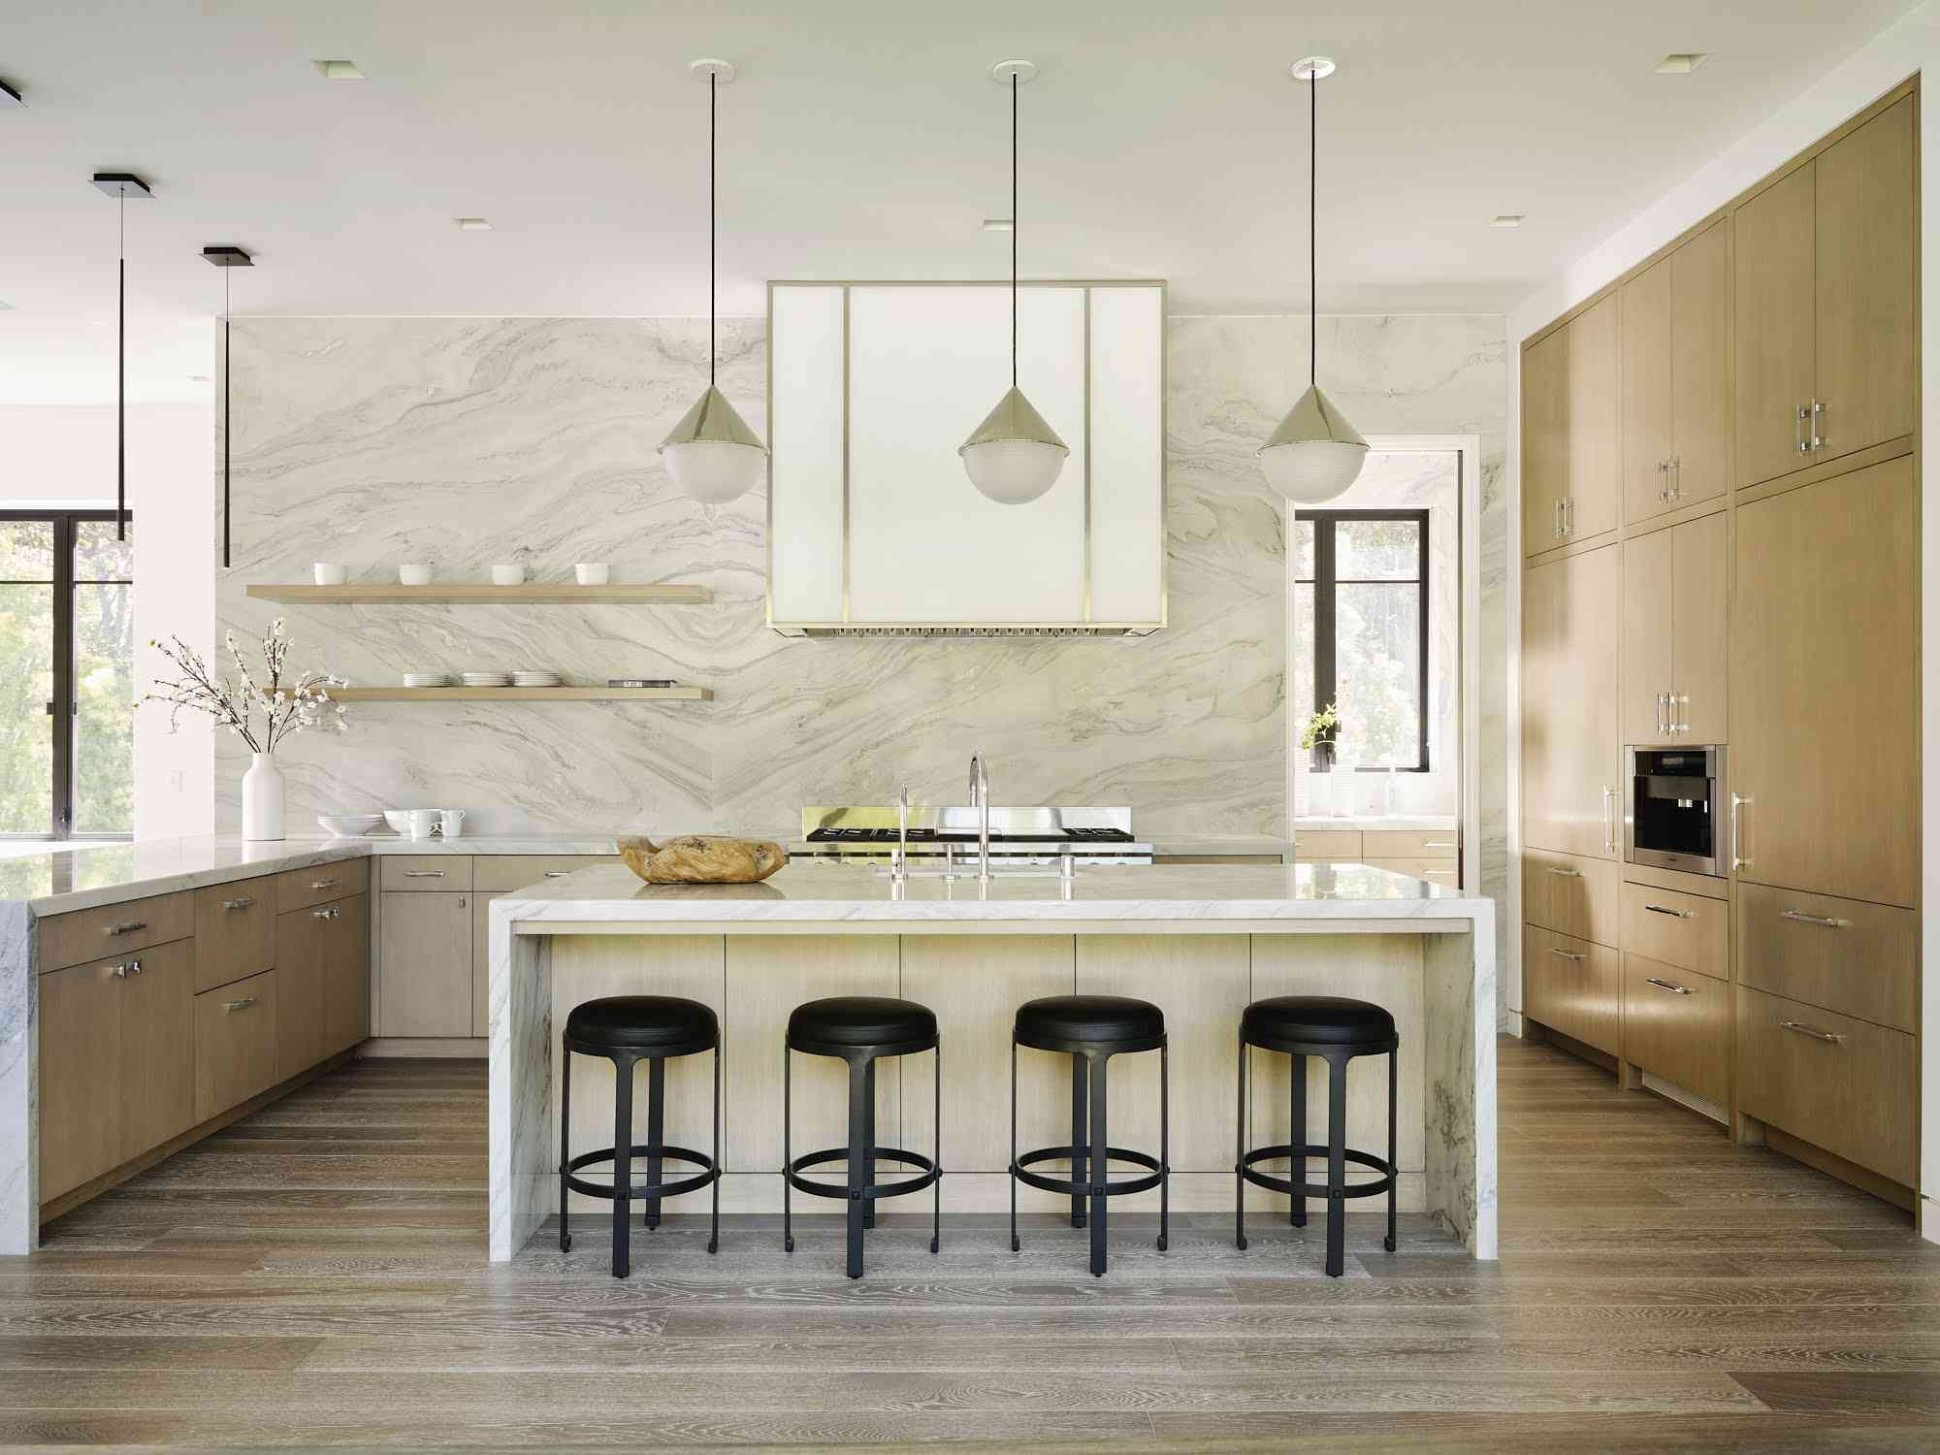 3 Polished Modern Kitchen Design Ideas to Consider - modern kitchen images ideas